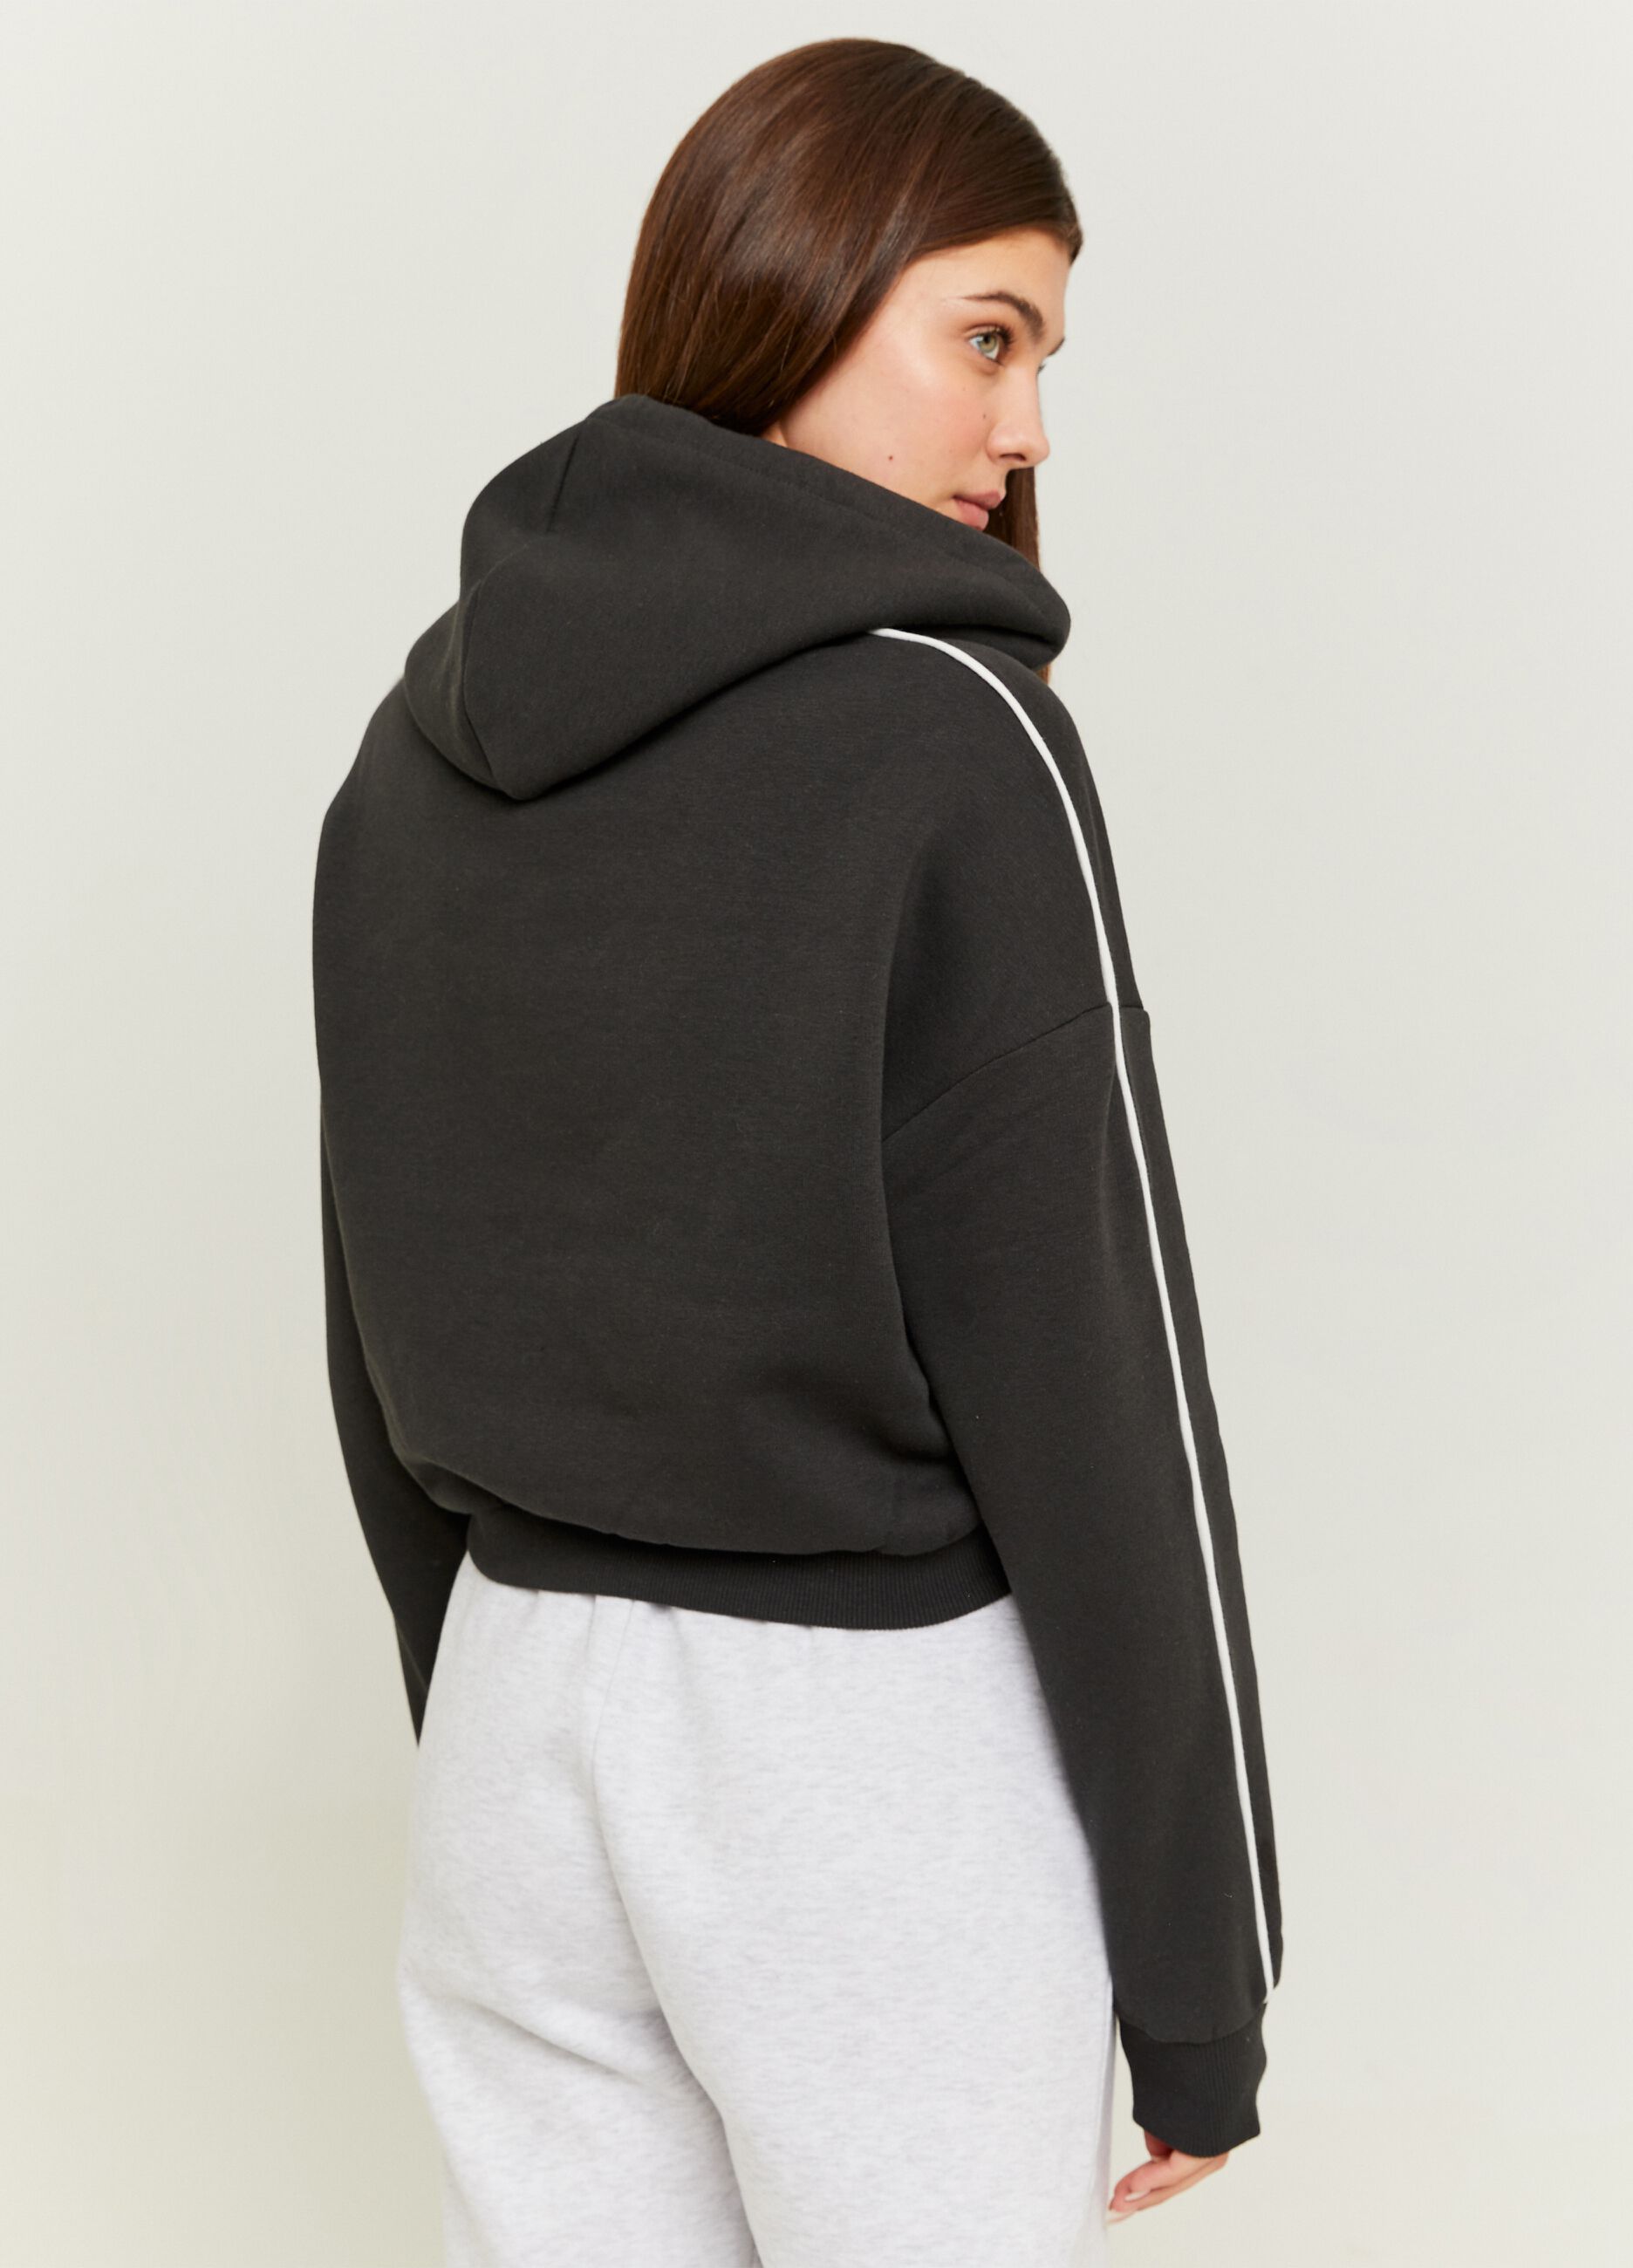 Crop sweatshirt with hood and print